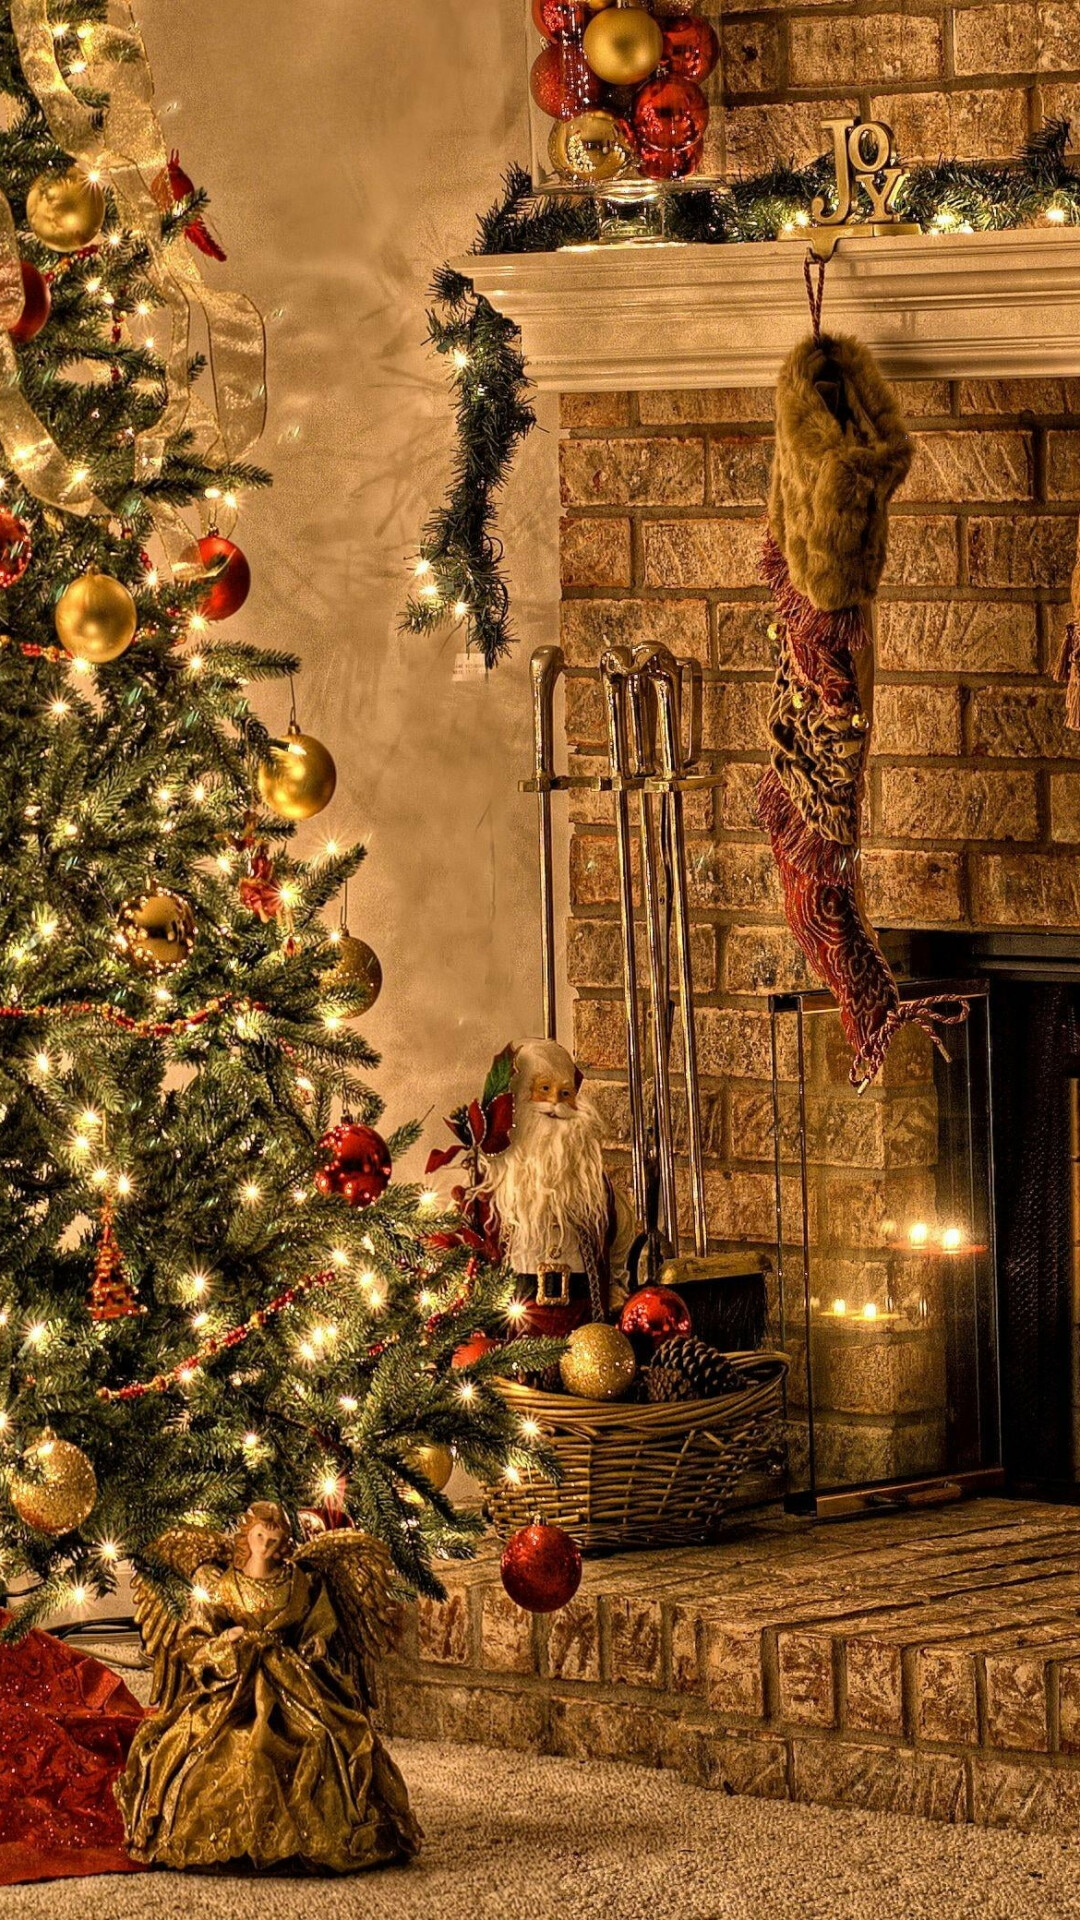 Christmas Fireplace: Mistletoe, Garland, Socks, Winter holidays, Hearth. 1080x1920 Full HD Wallpaper.